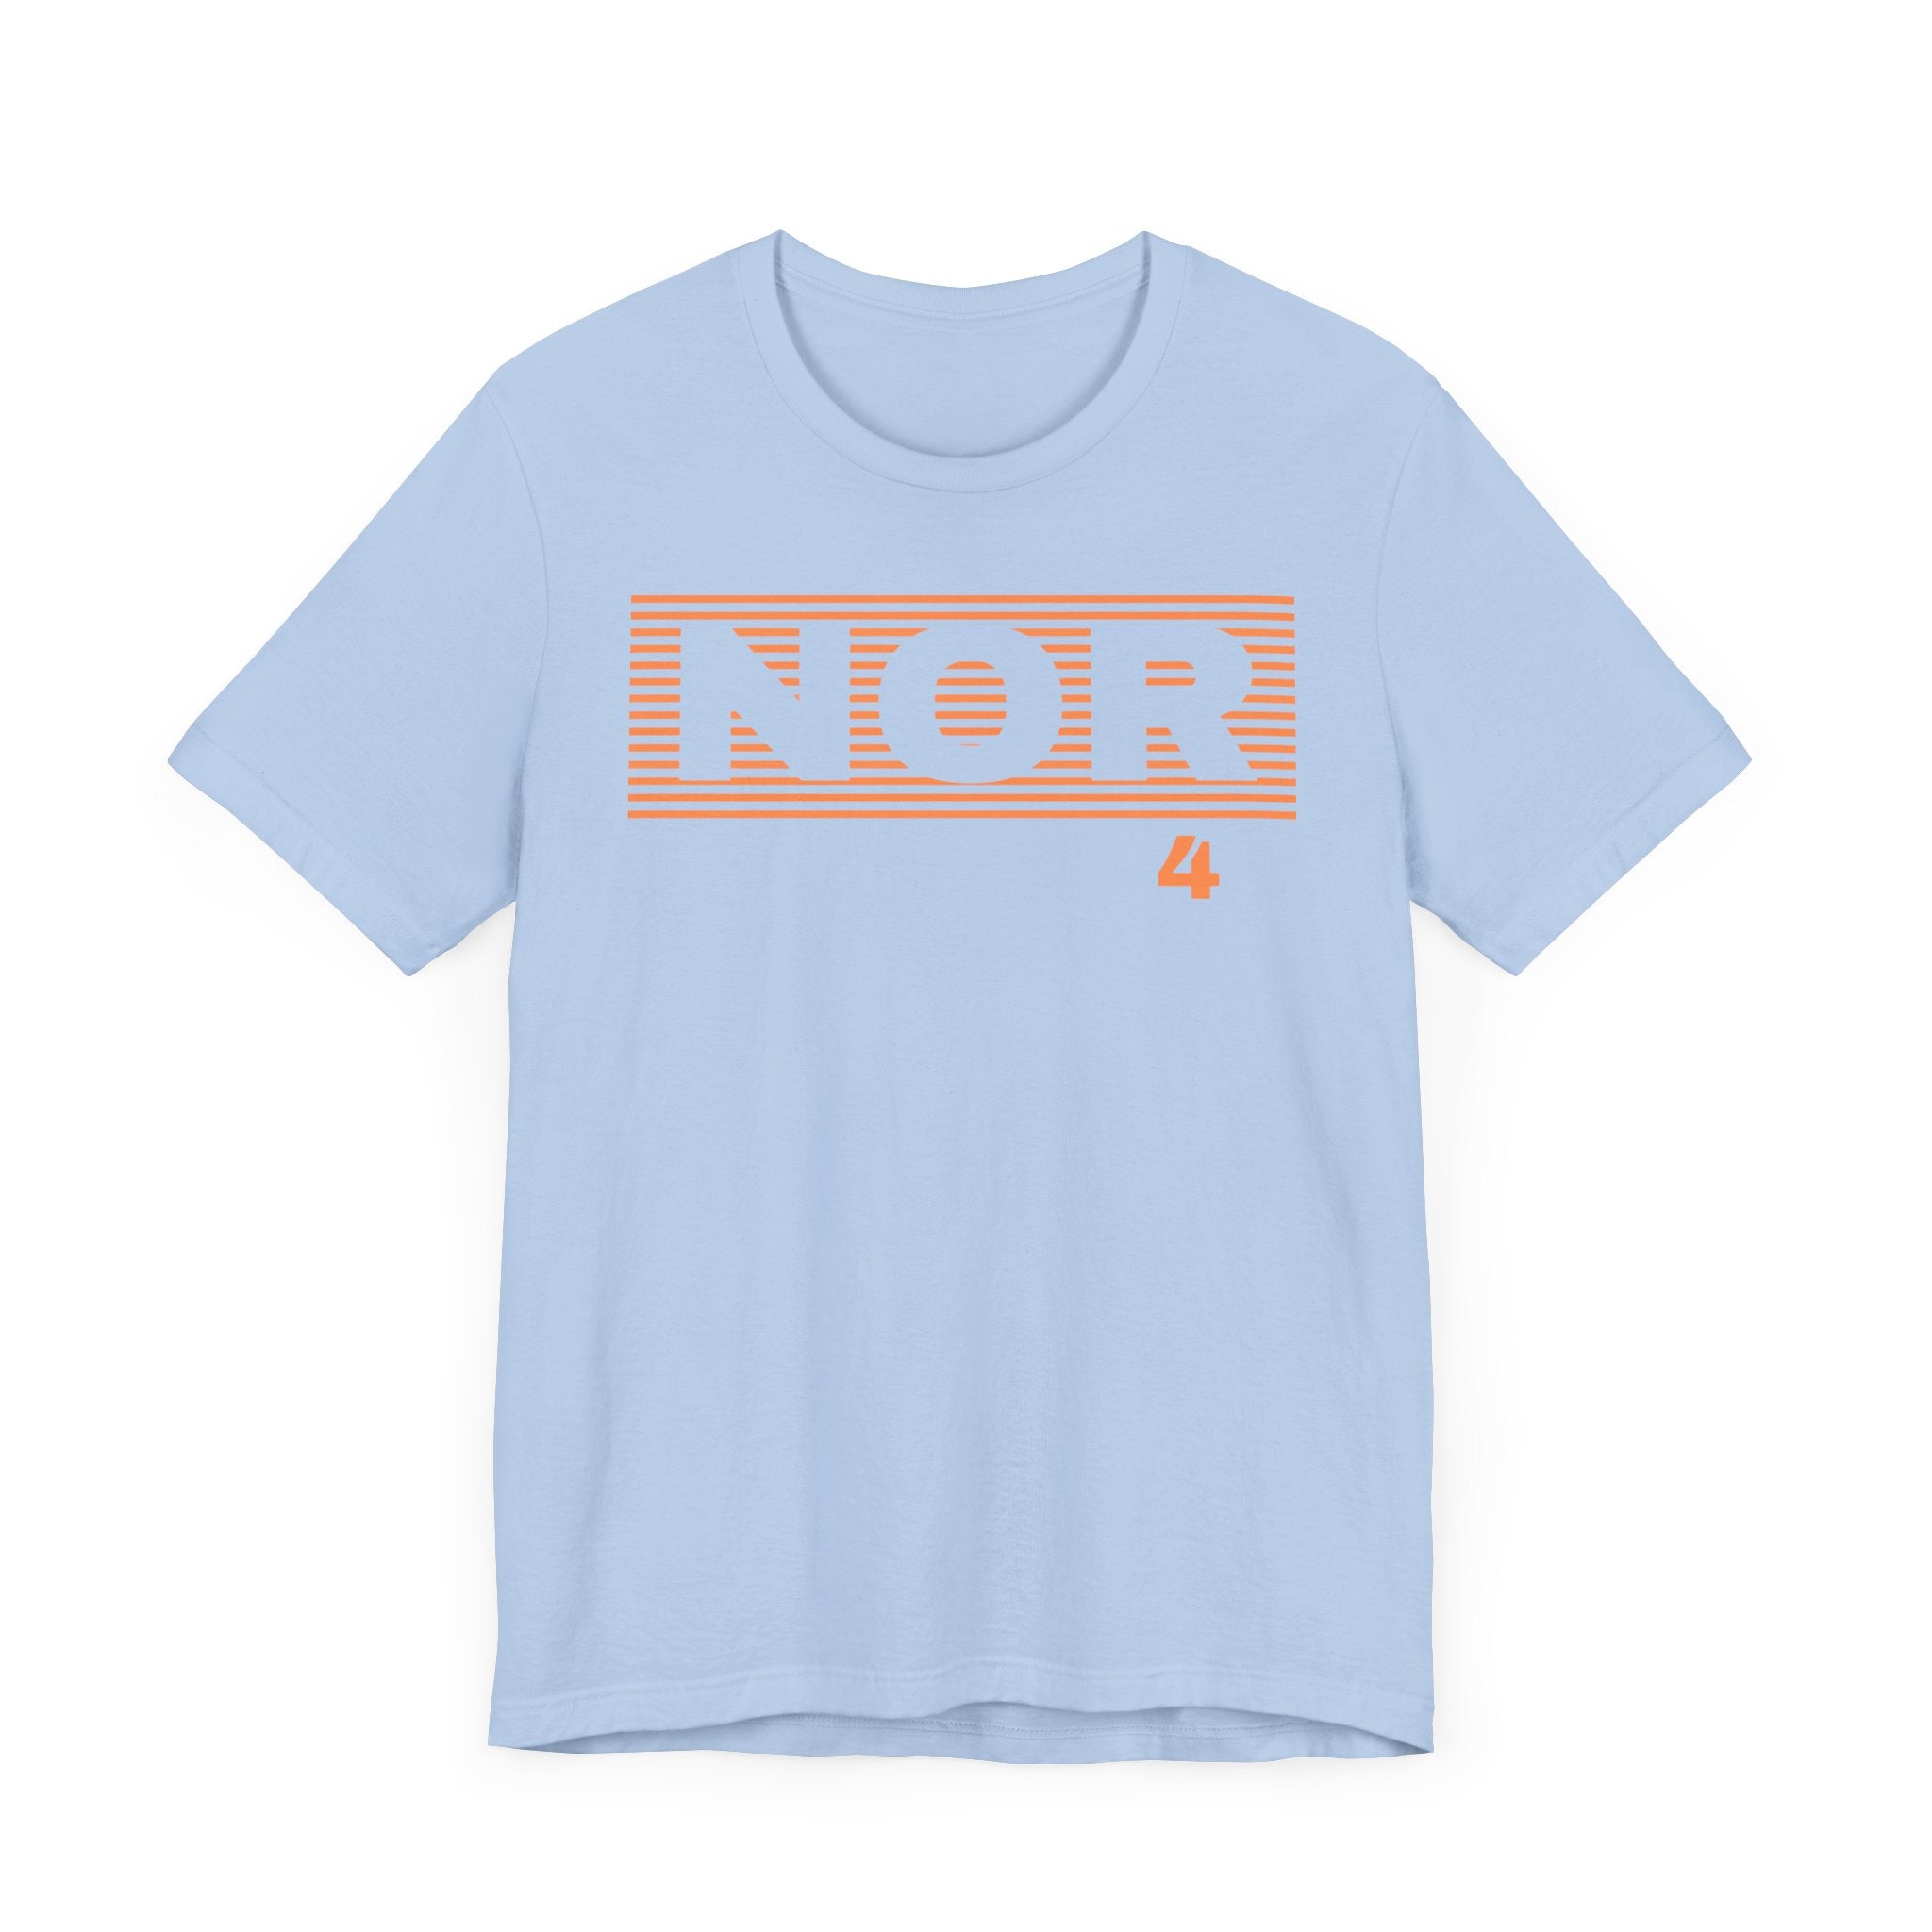 NOR4 Stealth Graphic T-Shirt - FormulaFanatics